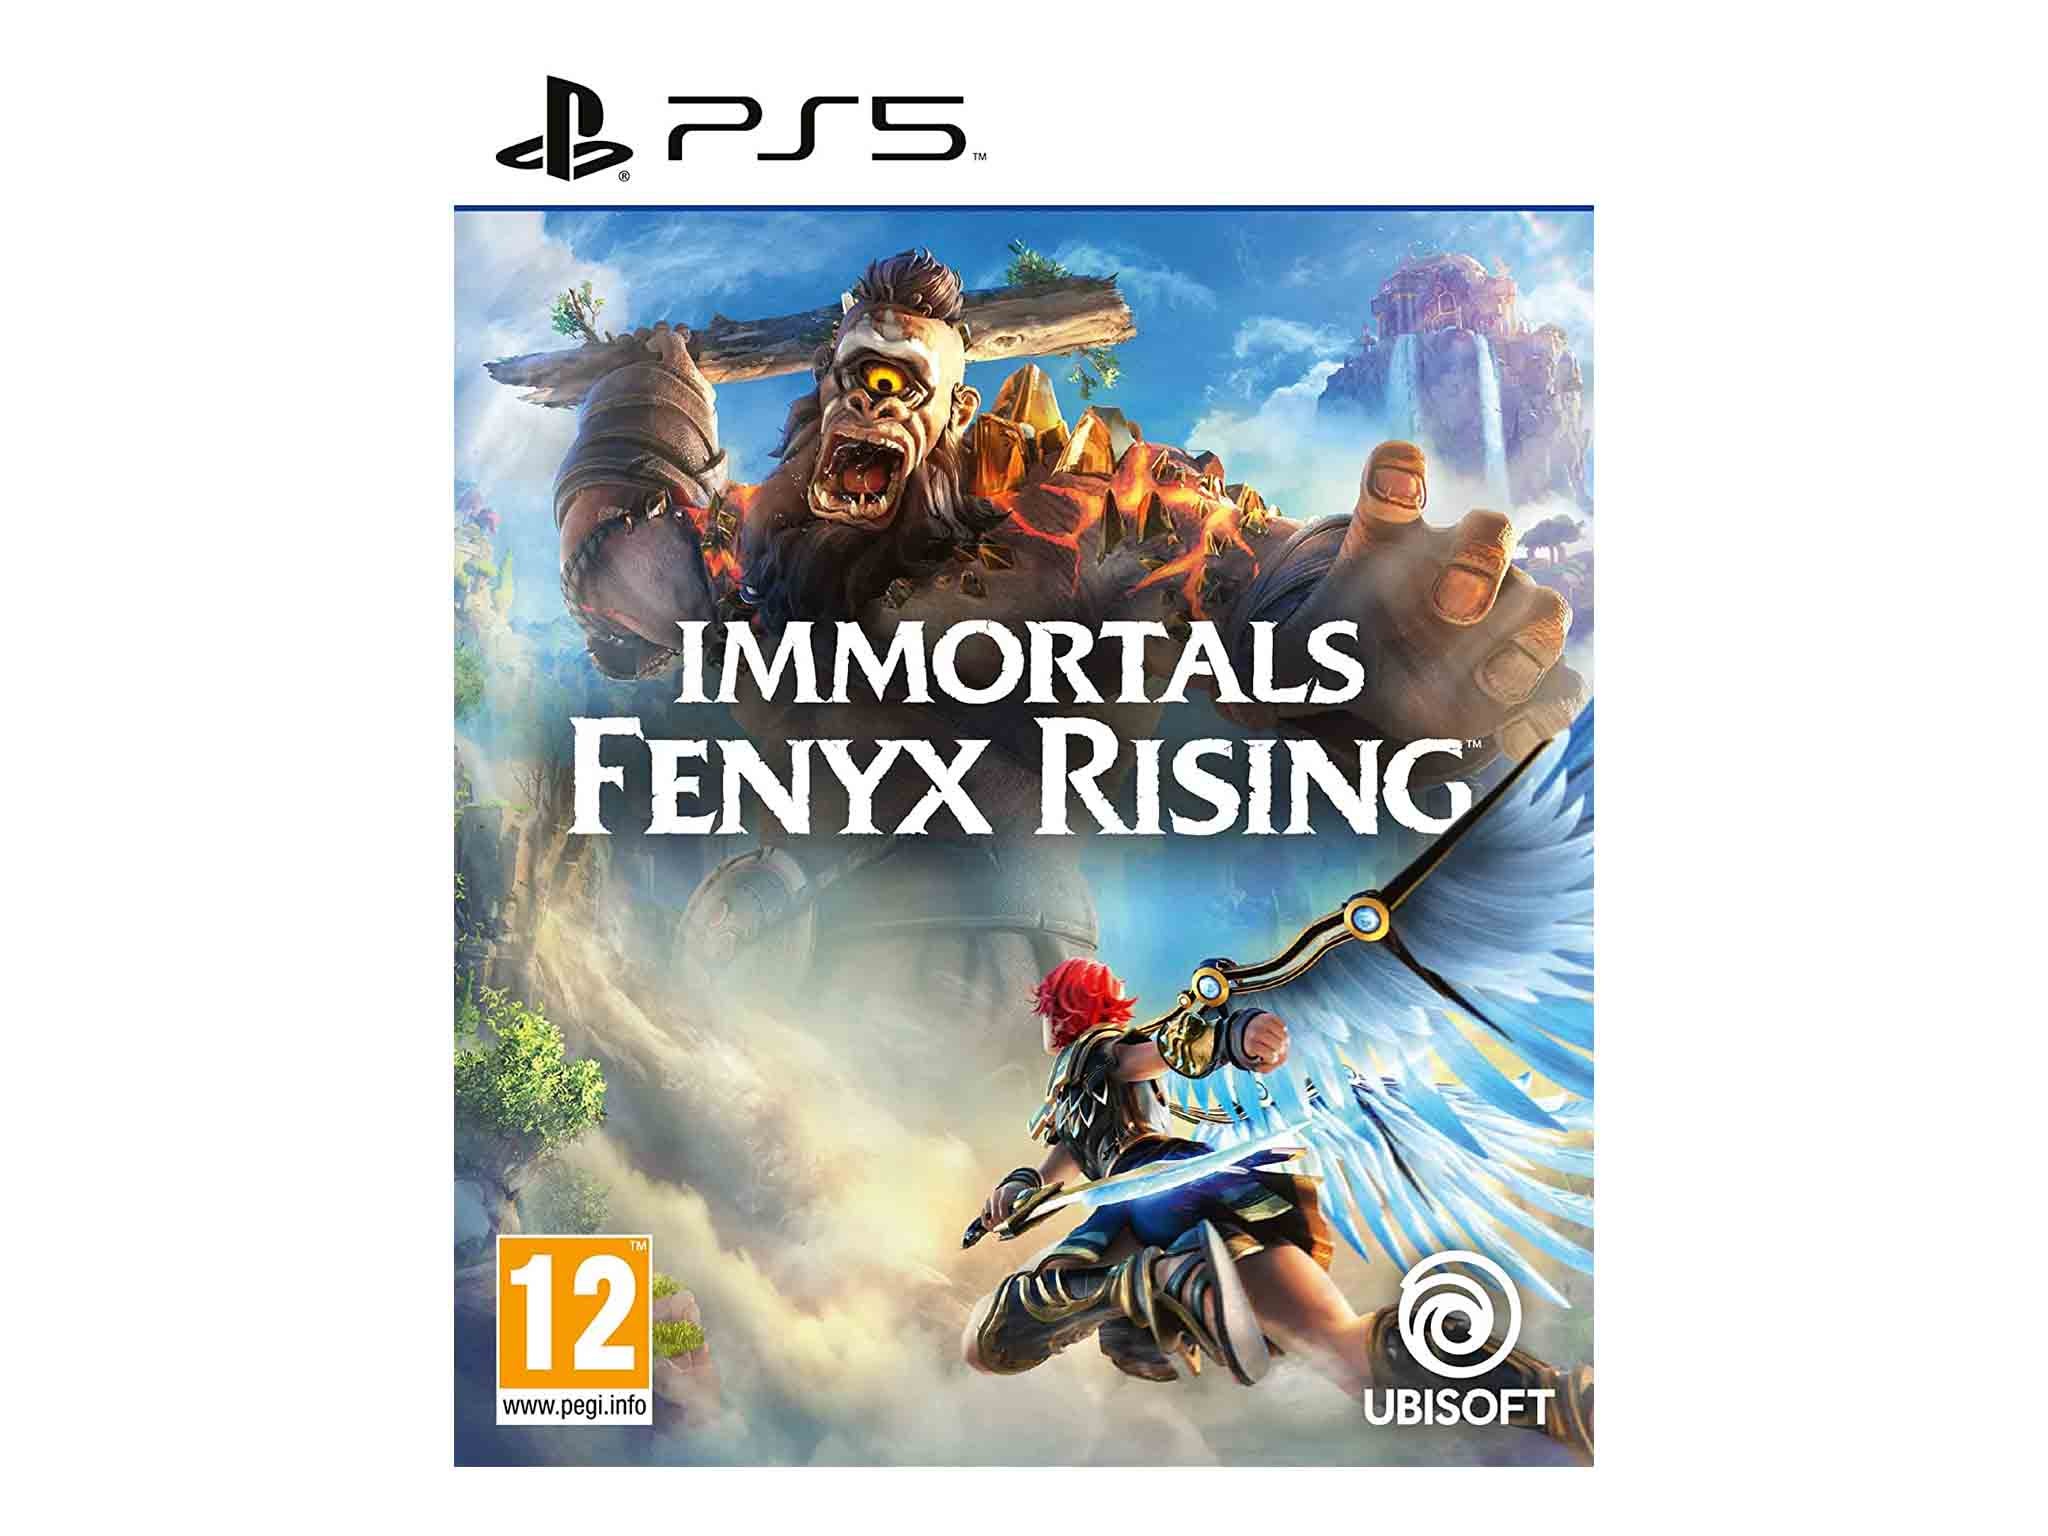 ‘Immortals Fenyx Rising’: Was £57.99, now £21.49, Amazon.co.uk